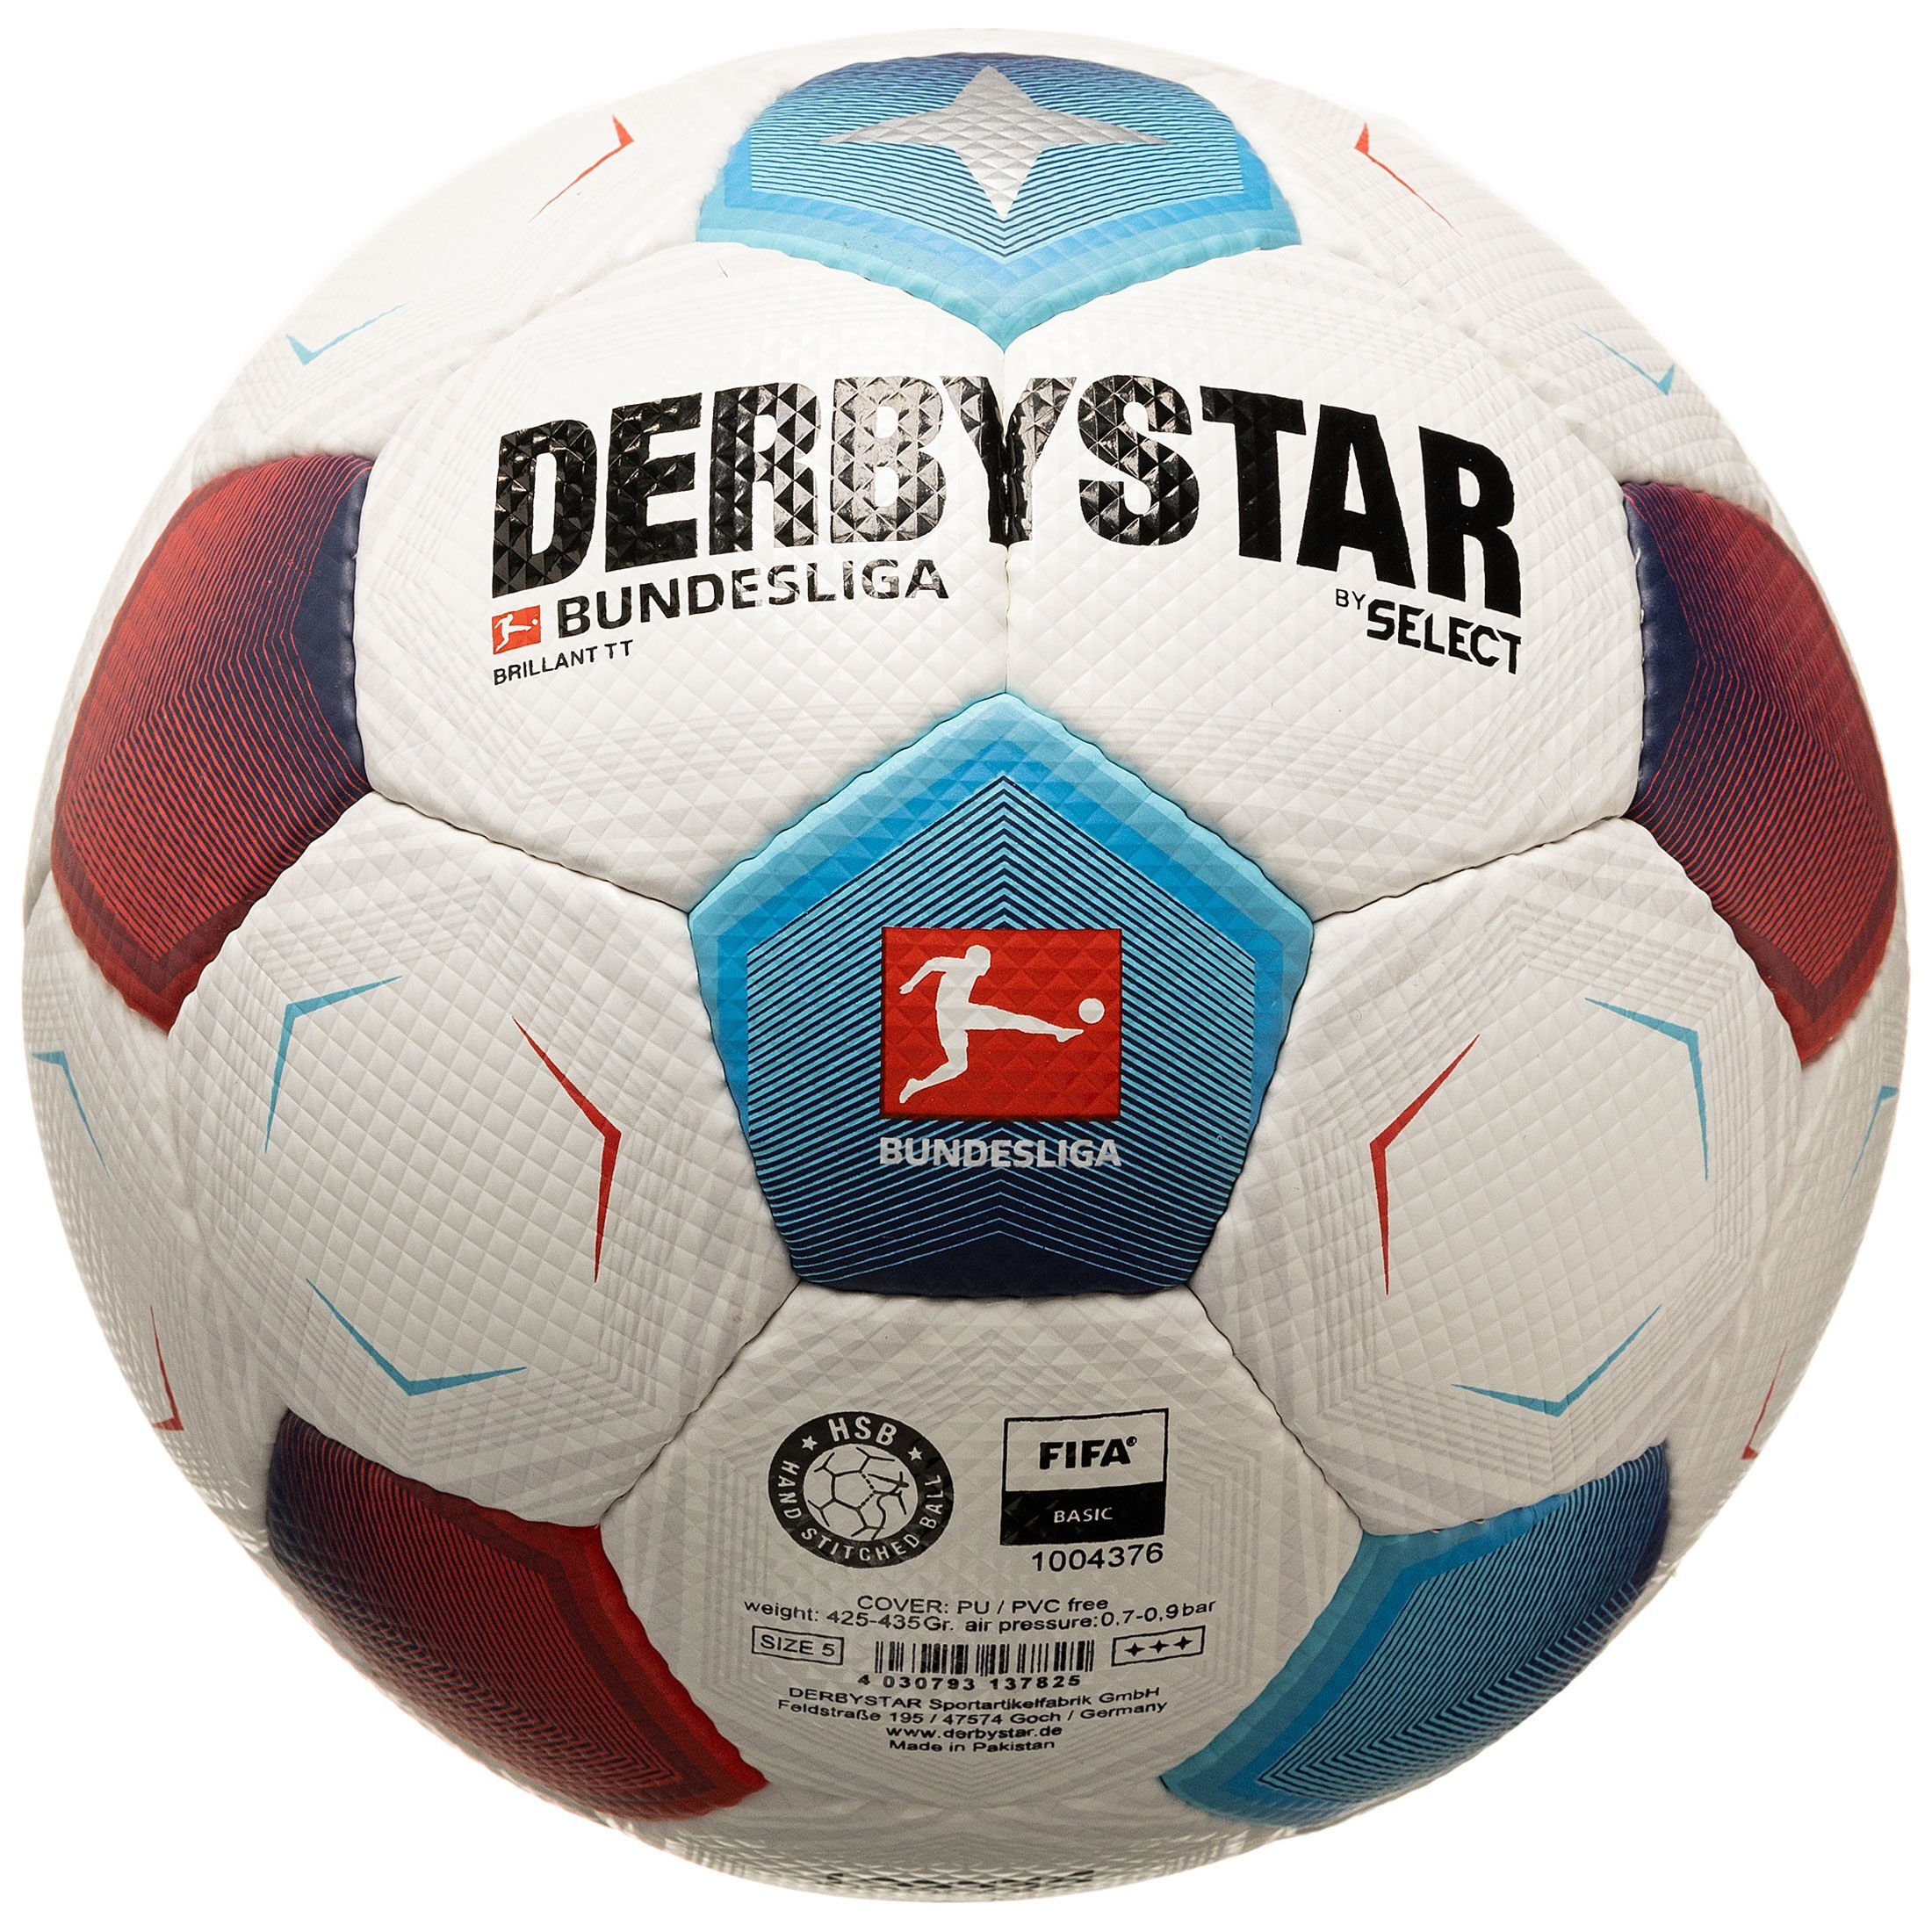 Derbystar TT Bundesliga Brillant Bundesliga Fußball Sichtbarkeit für v23 High-Visibility-Farben Fußball,